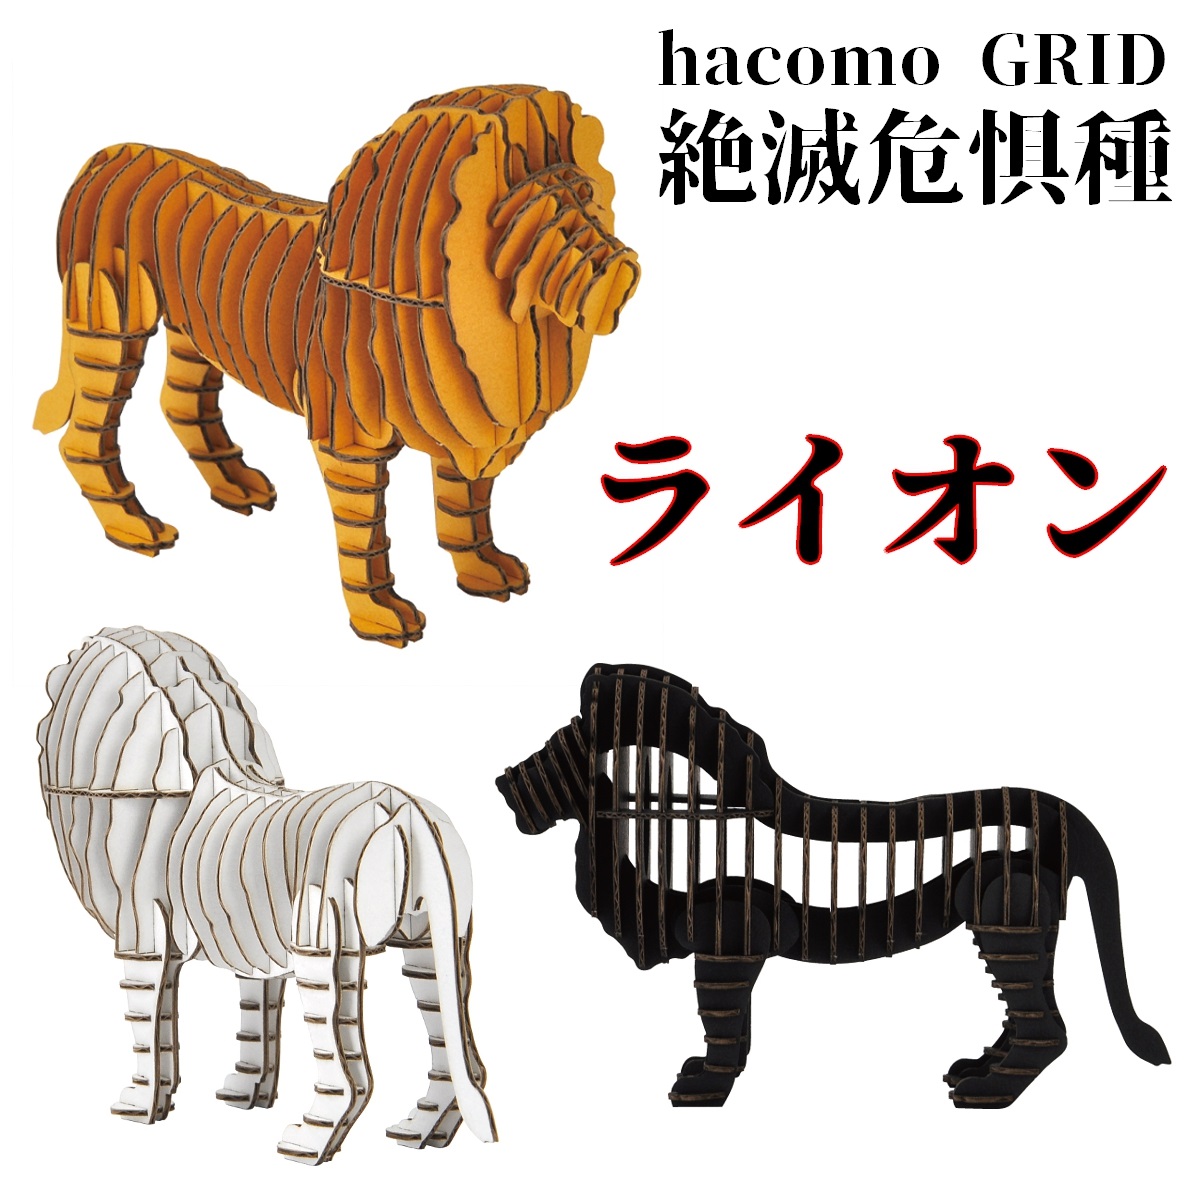 hacomo GRID　ライオン　3色　ダンボール工作キット